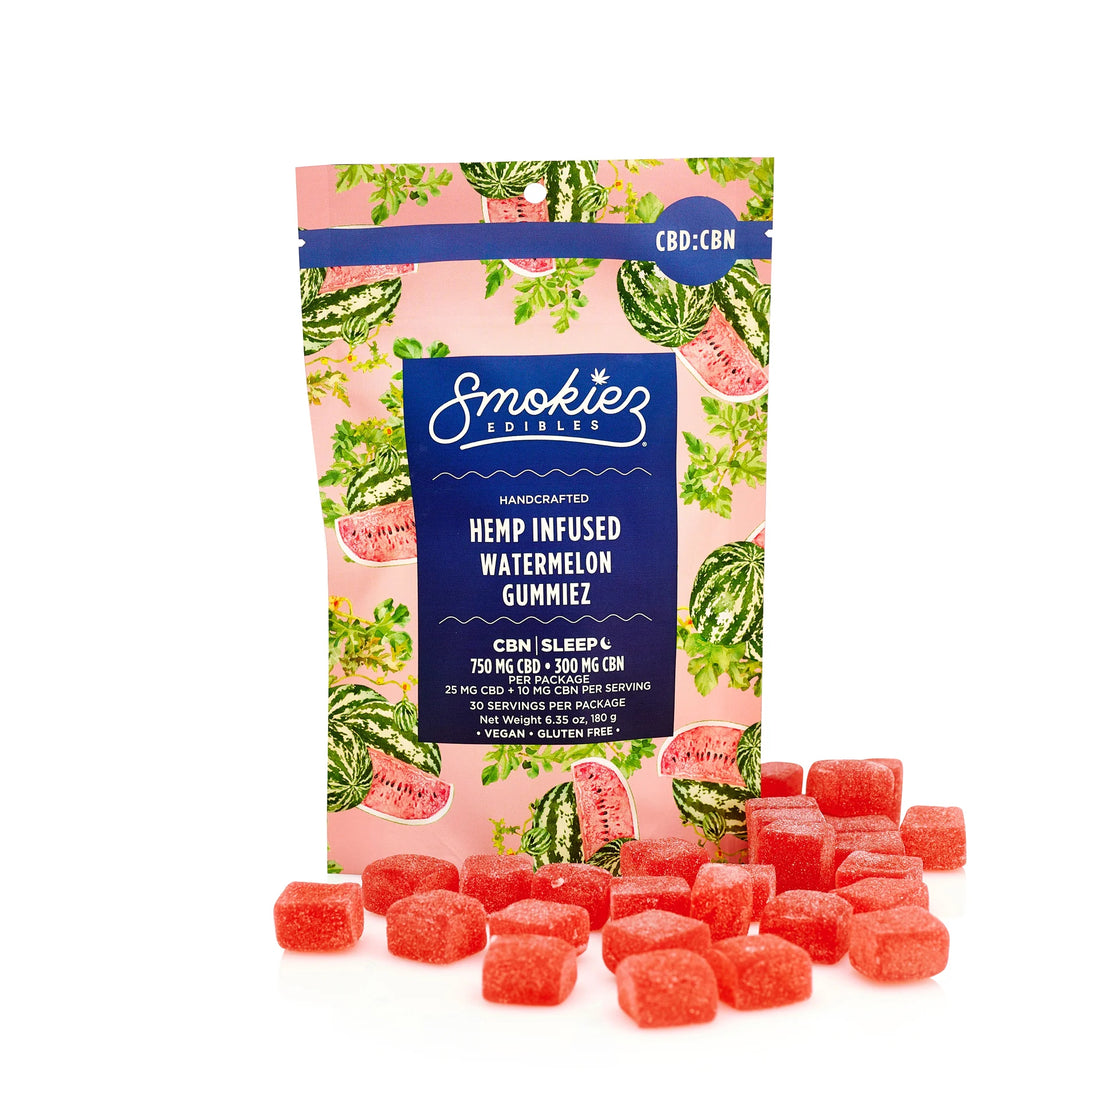 Smokiez CBD CBN watermelon Gummies for sleep bliss shop chicago